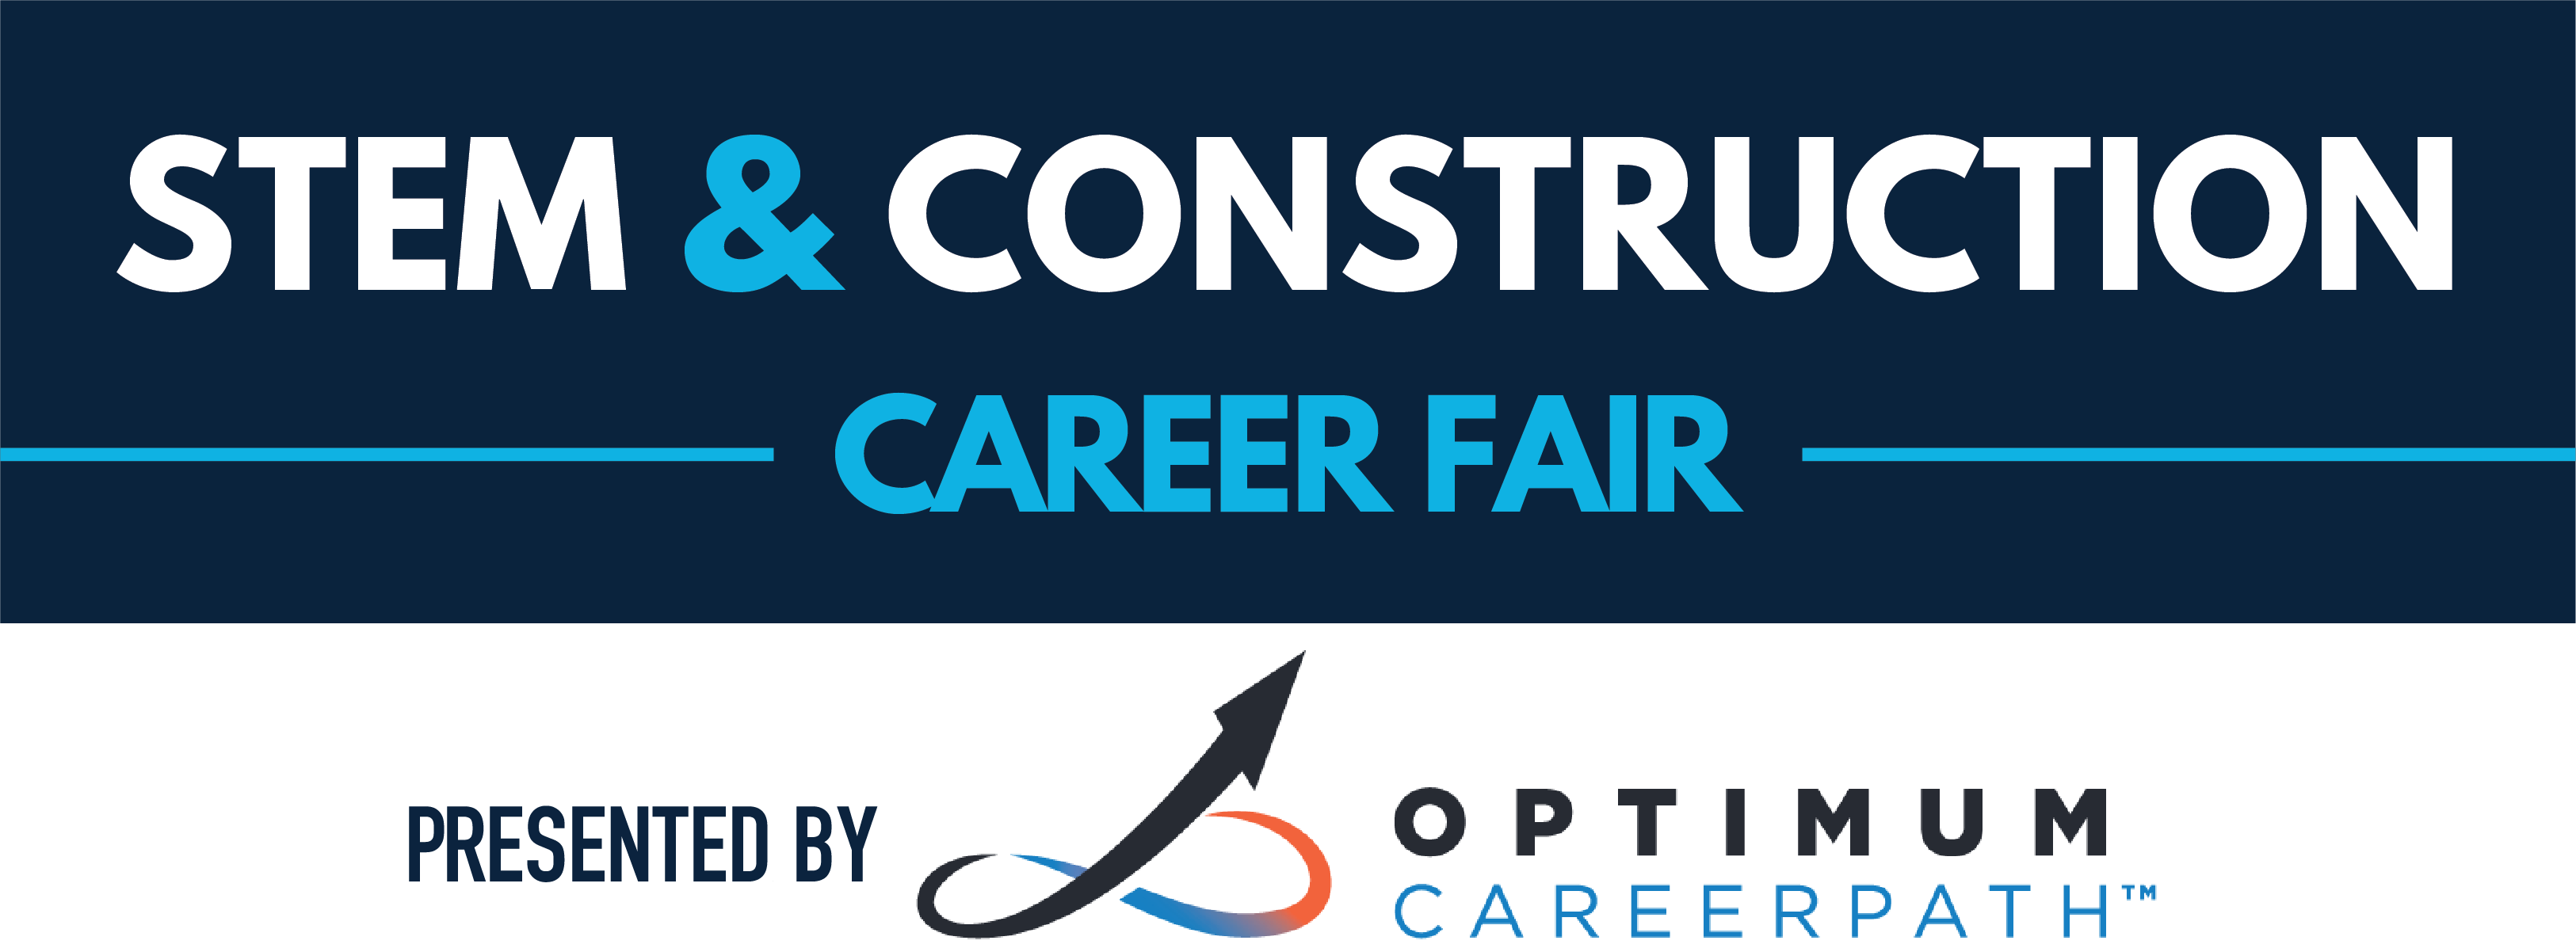 STEM and Construction Career Fair sponsored by Optimum Careerpath